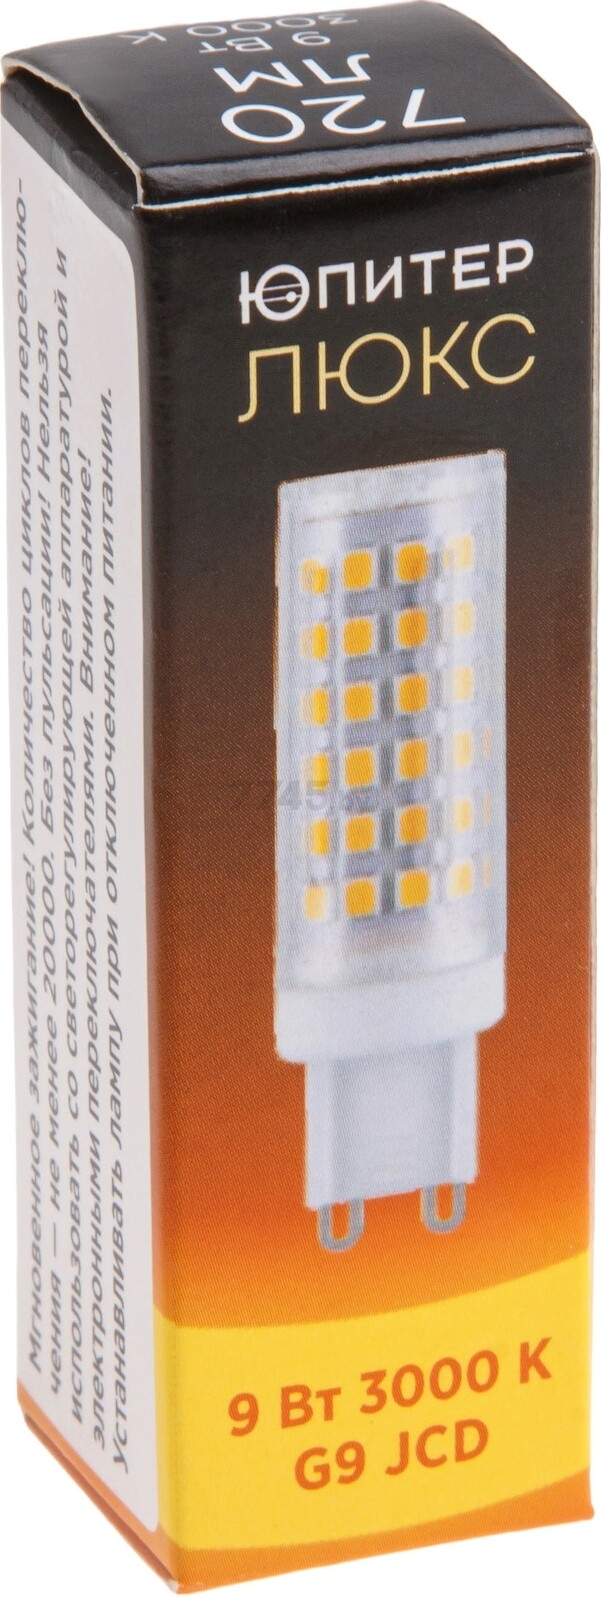 Лампа светодиодная G9 ЮПИТЕР Люкс JCD 9 Вт 3000К (JP5101-35) - Фото 2